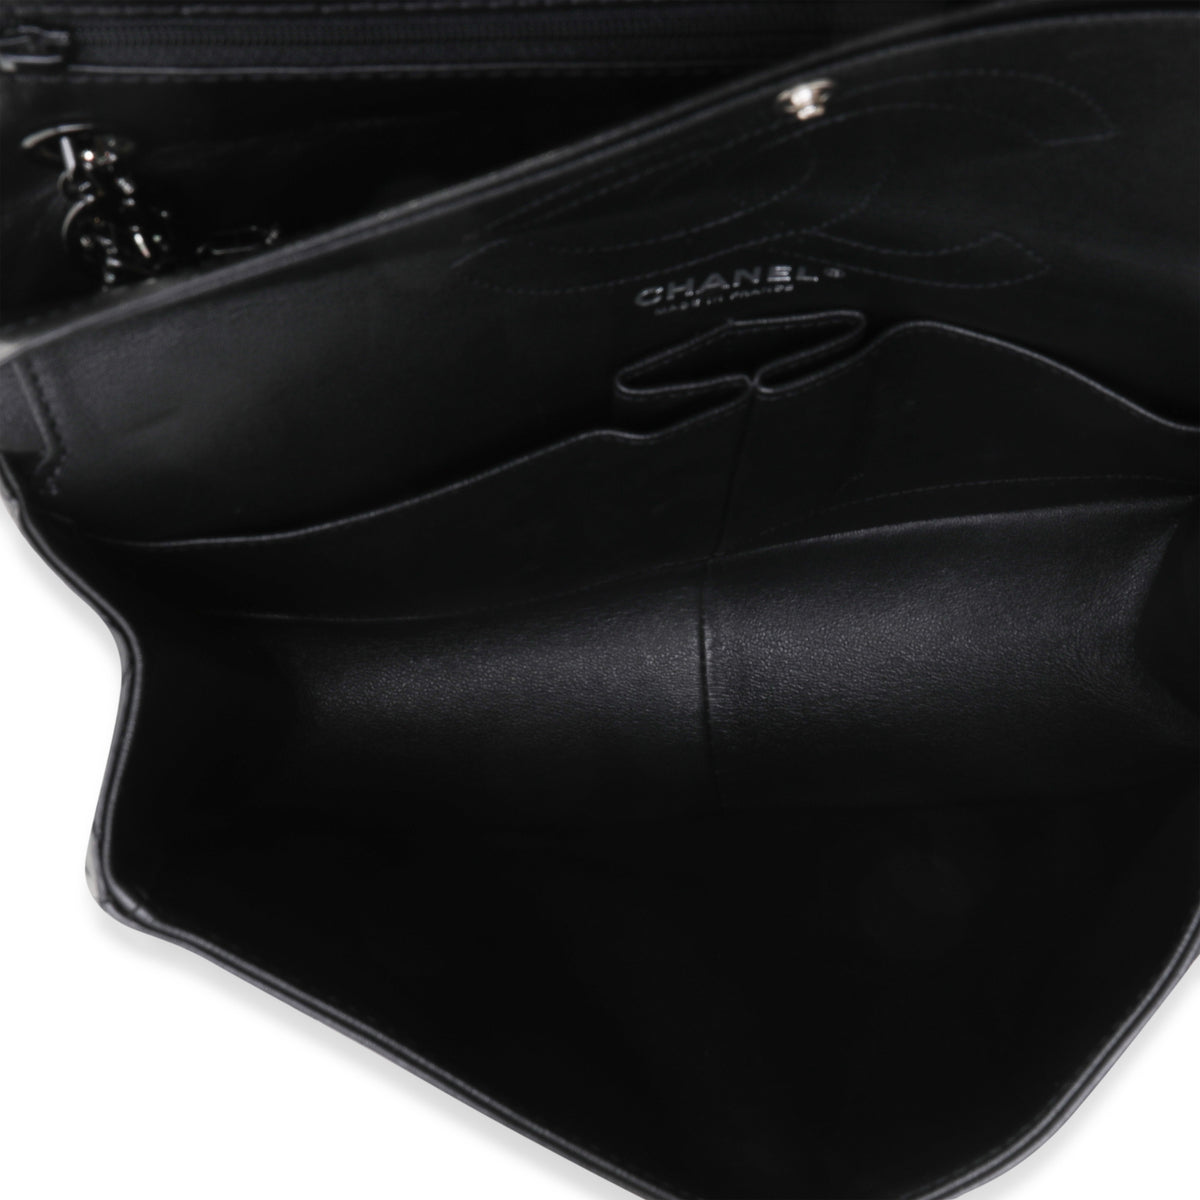 Chanel So Black Reissue 2.55 Flap Bag Chevron Aged Calfskin 226 Black